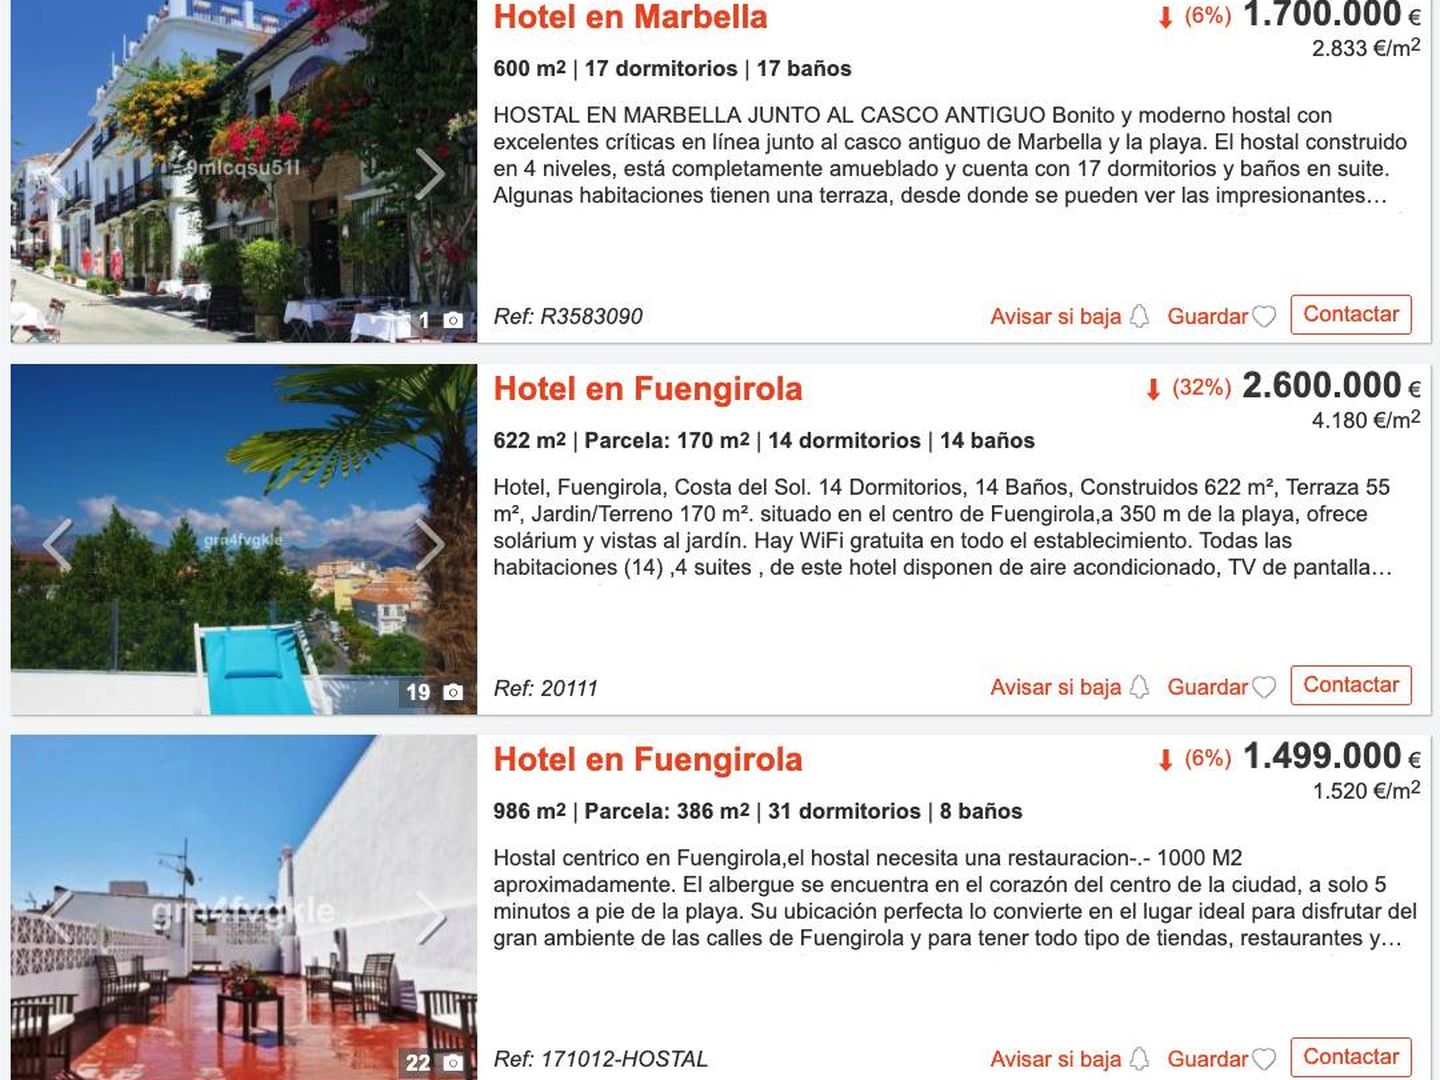 Ofertas de hoteles en el portal Spainhouses.net.